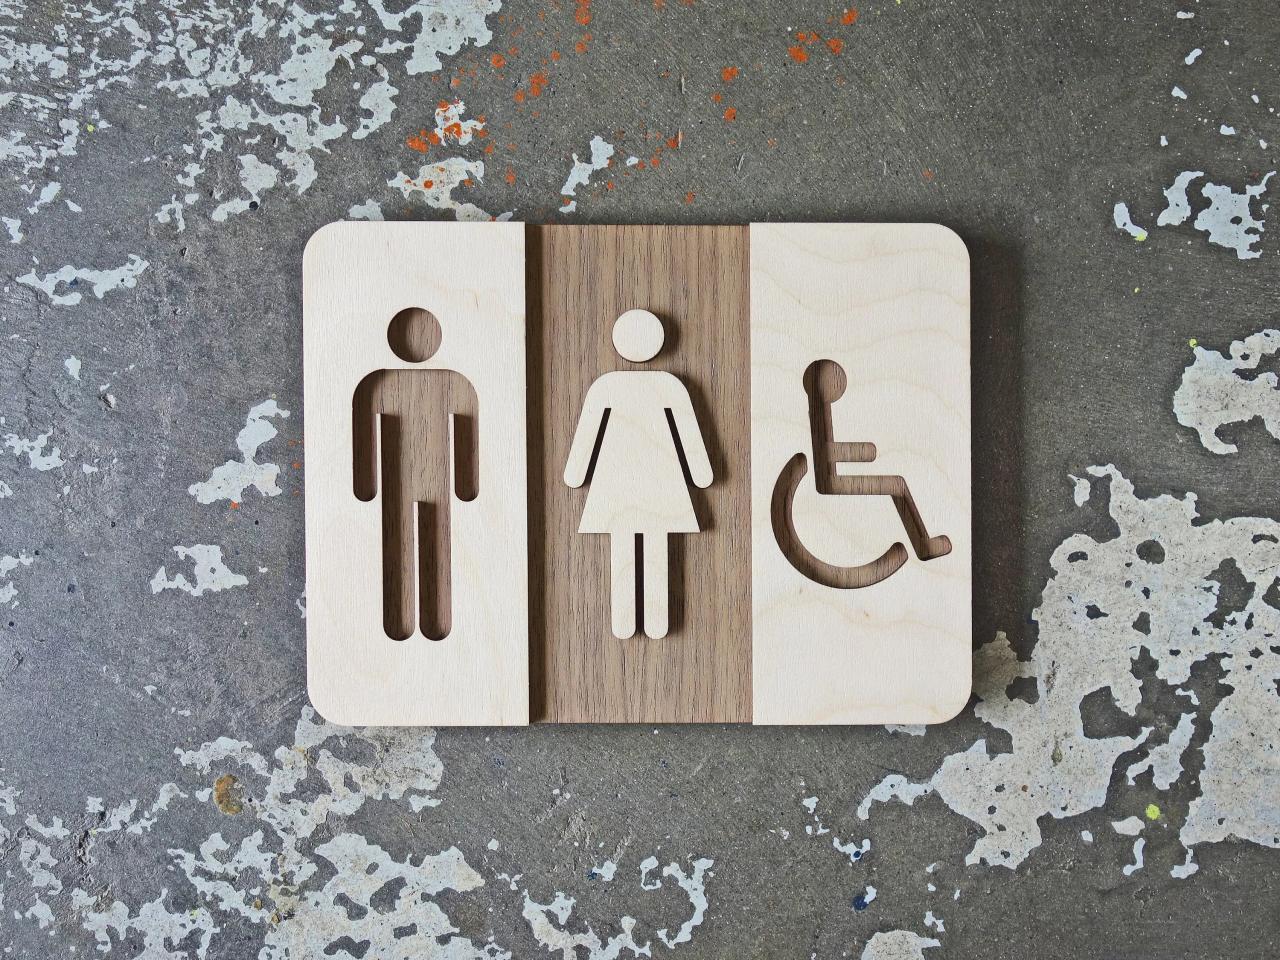 Unisex Restroom Sign Unique Bathroom Decor Modern Interior Etsy